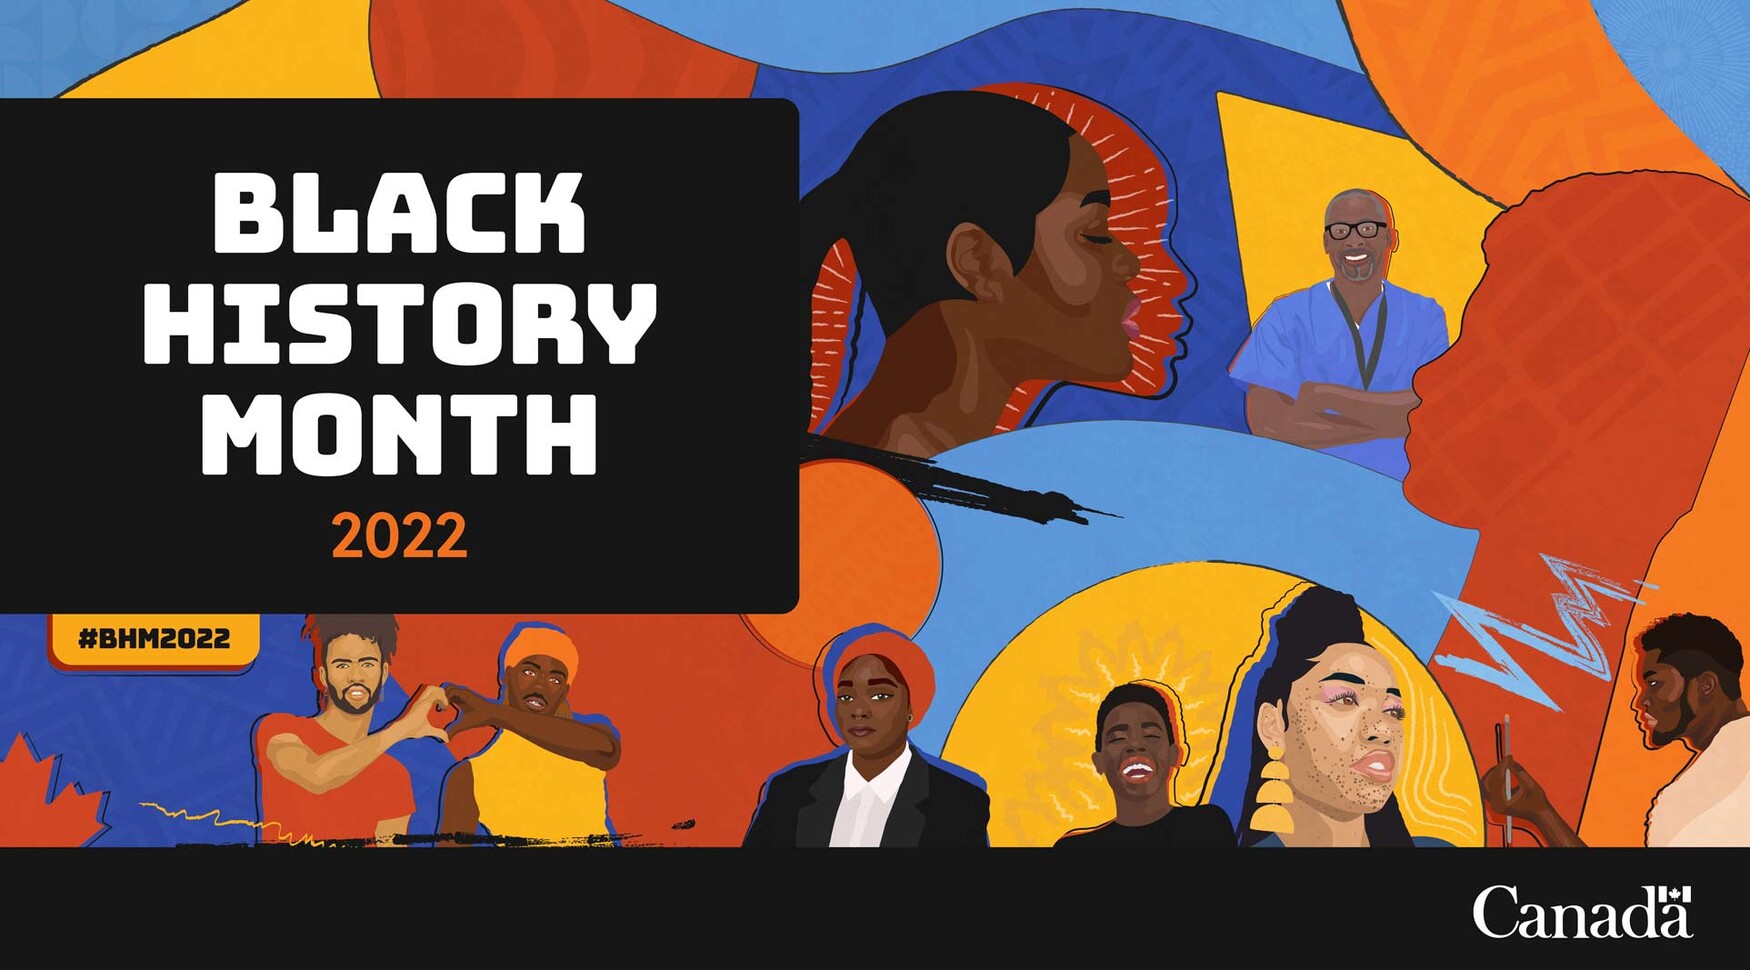 black history month logo